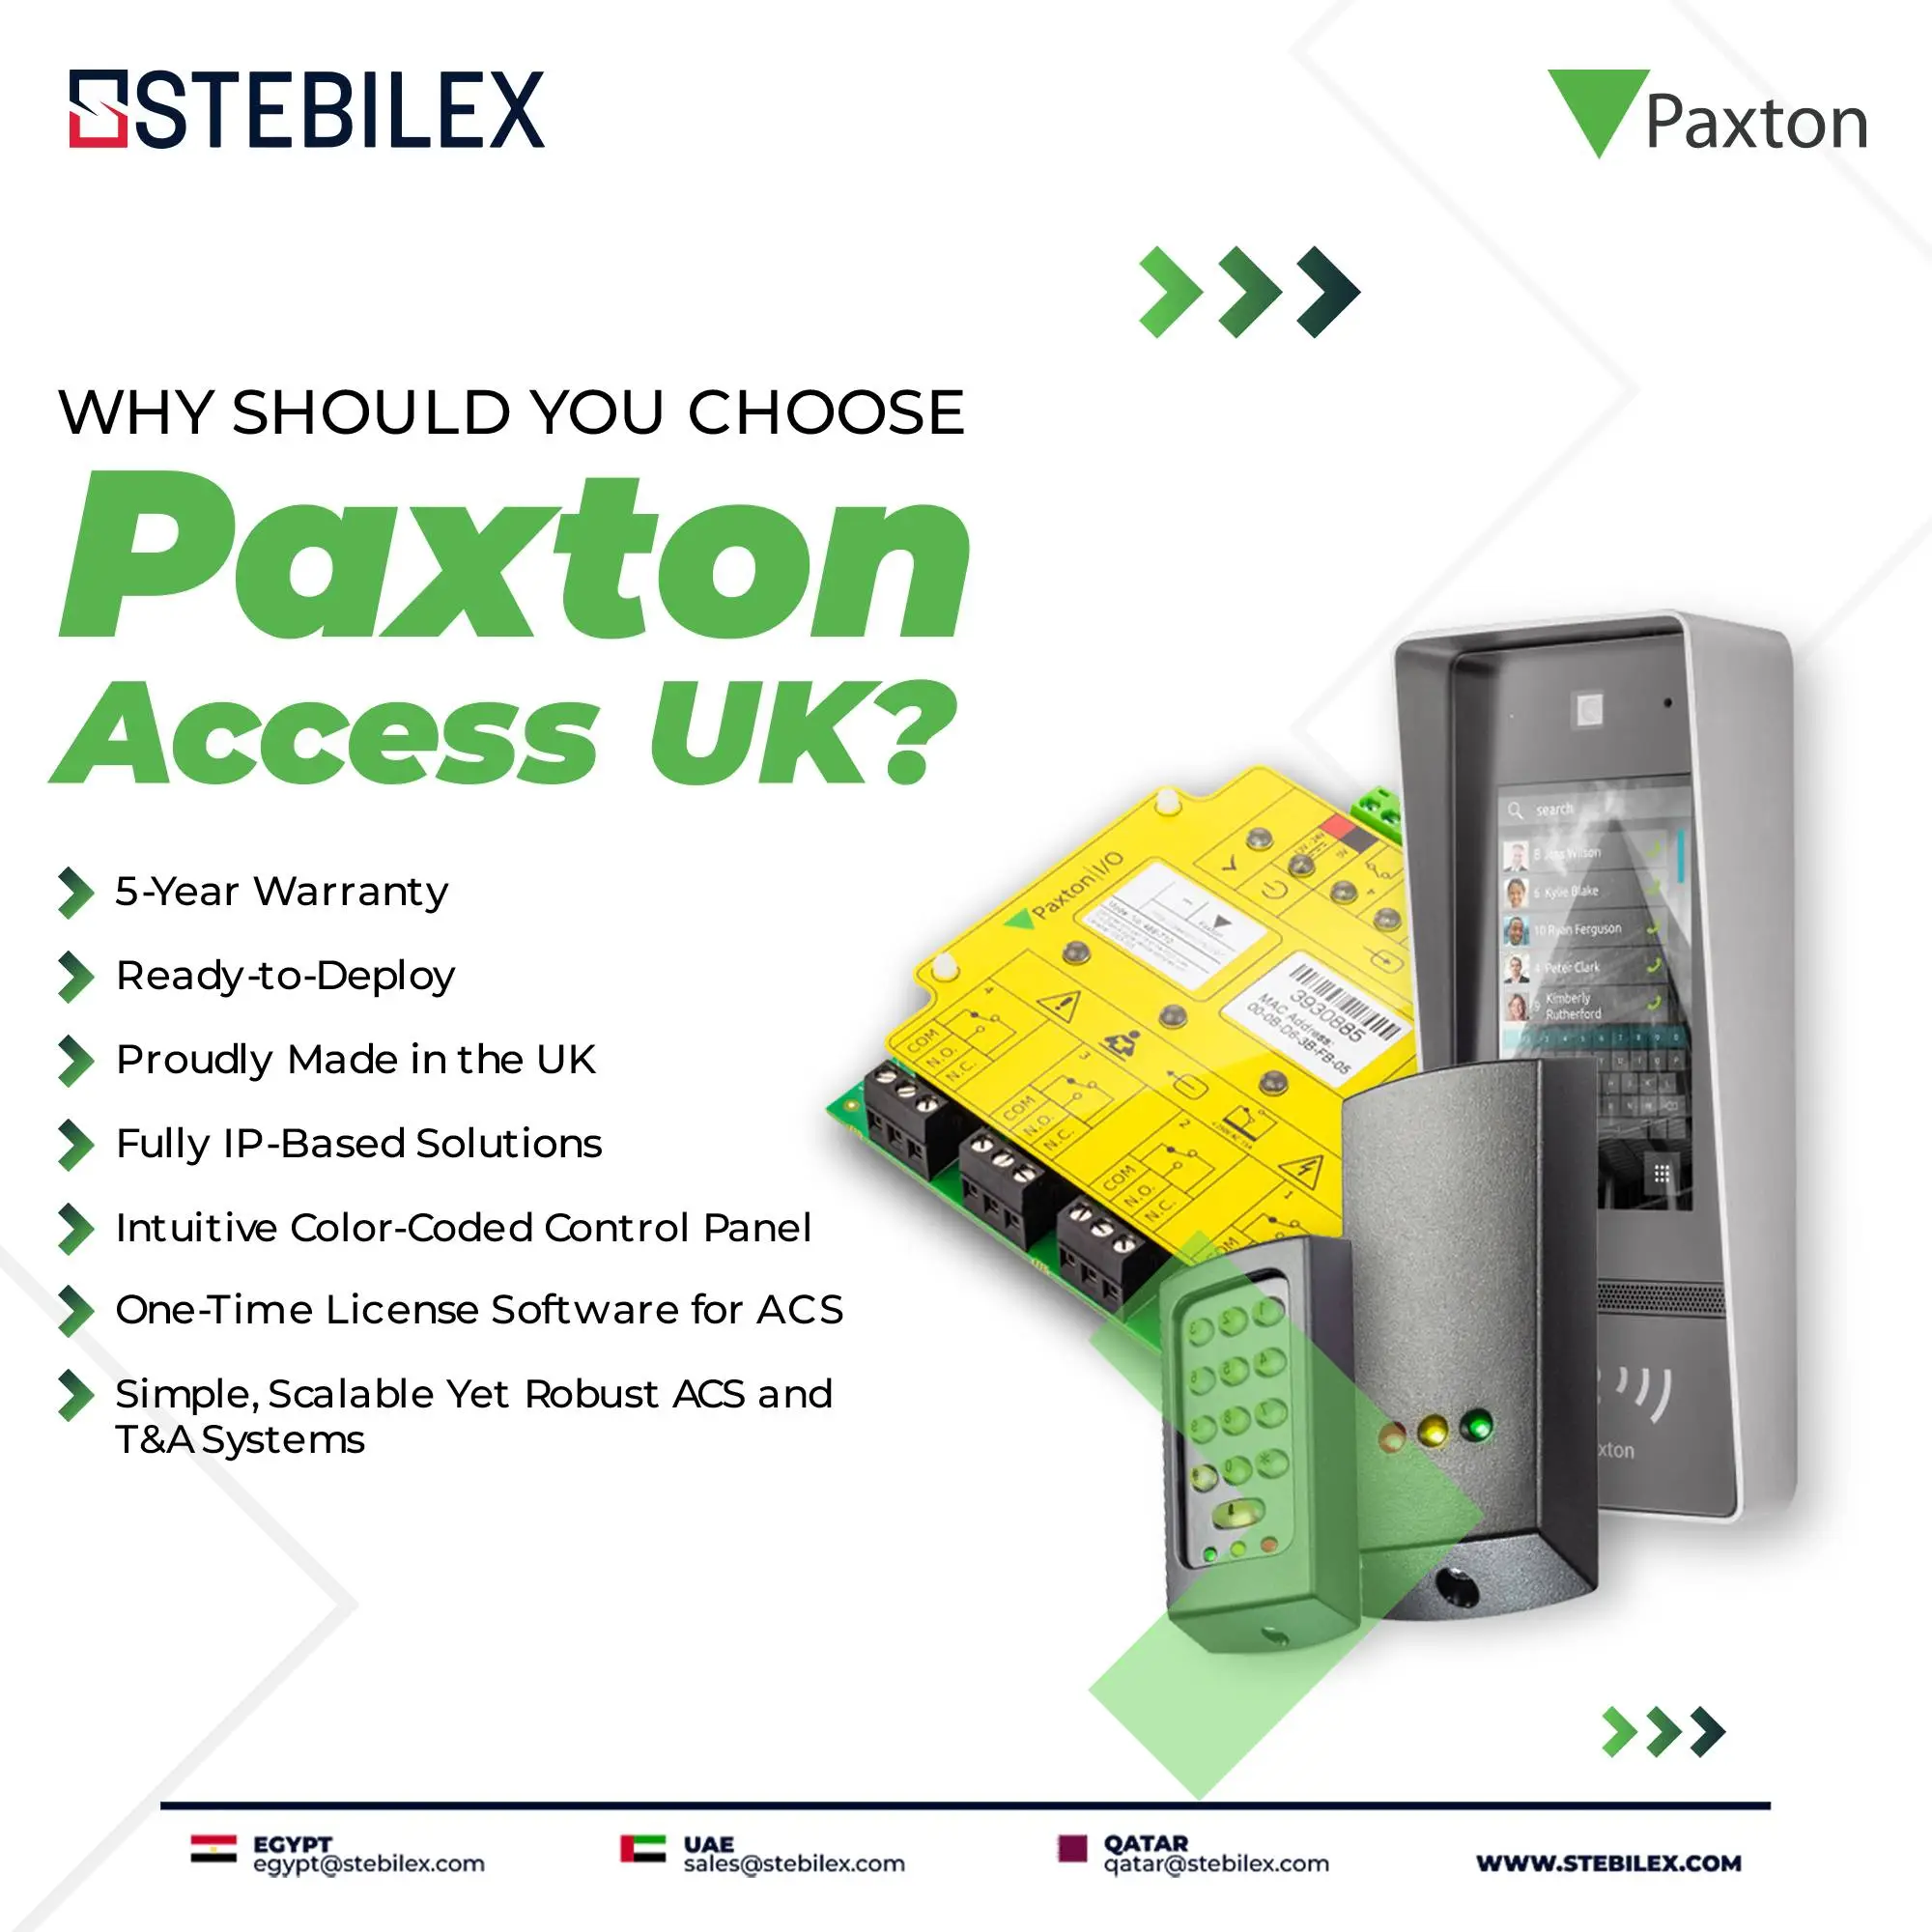 Paxton Access UK